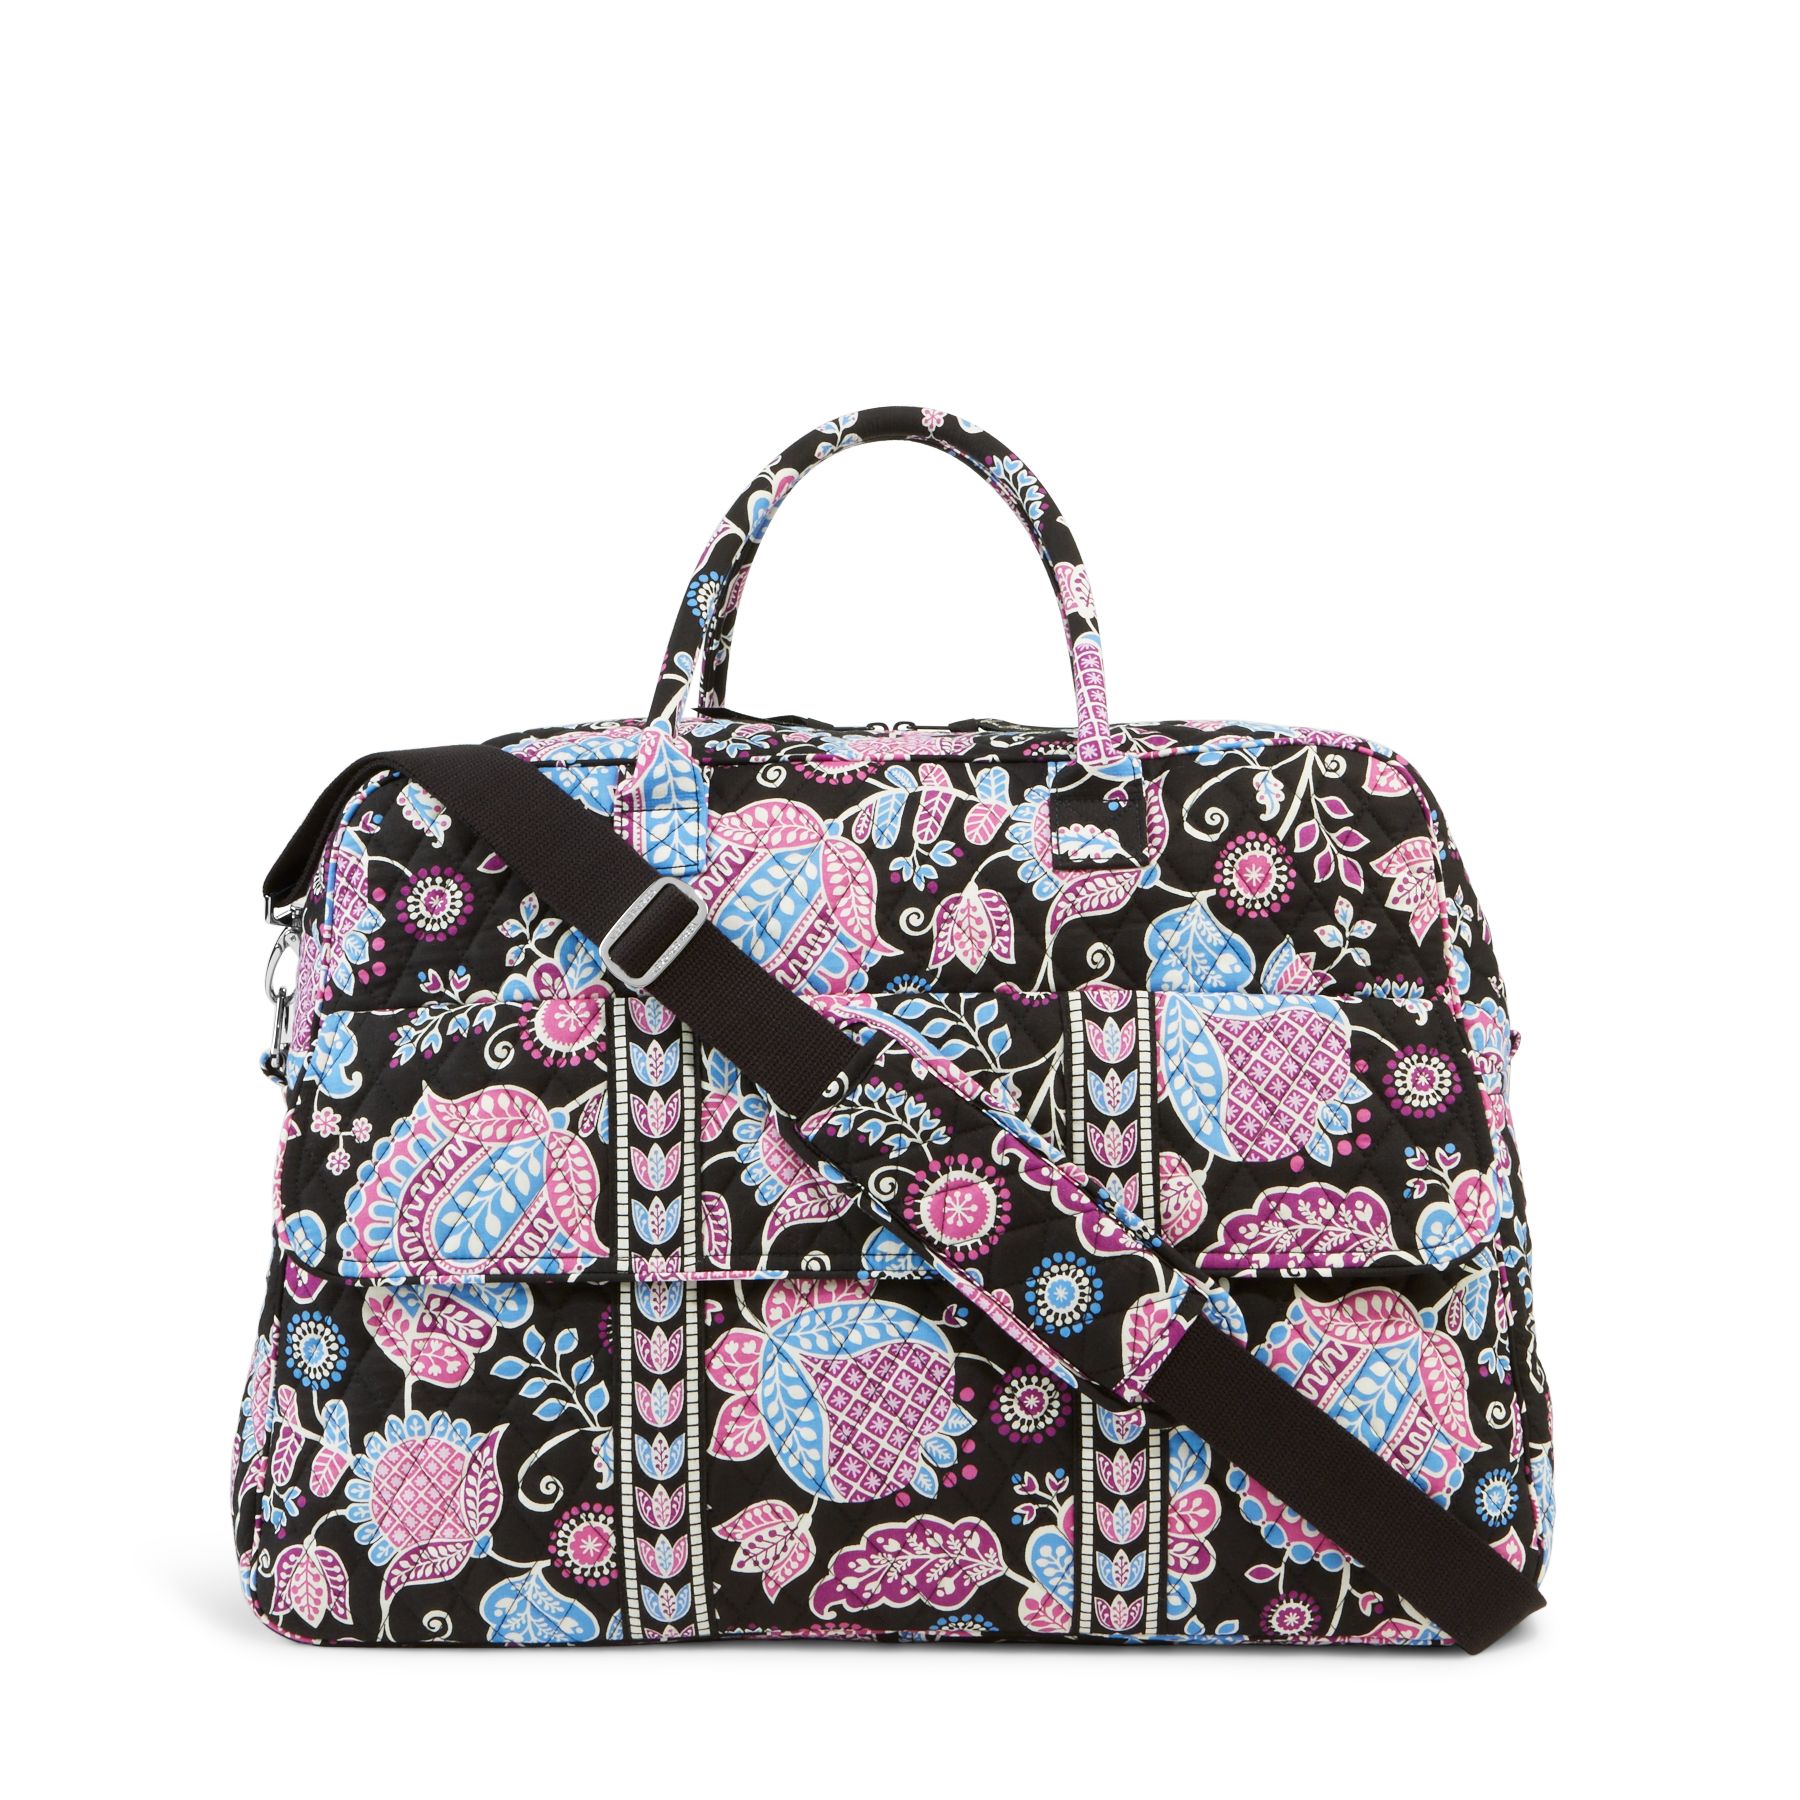 Vera Bradley Grand Traveler Travel Duffel Bag | eBay